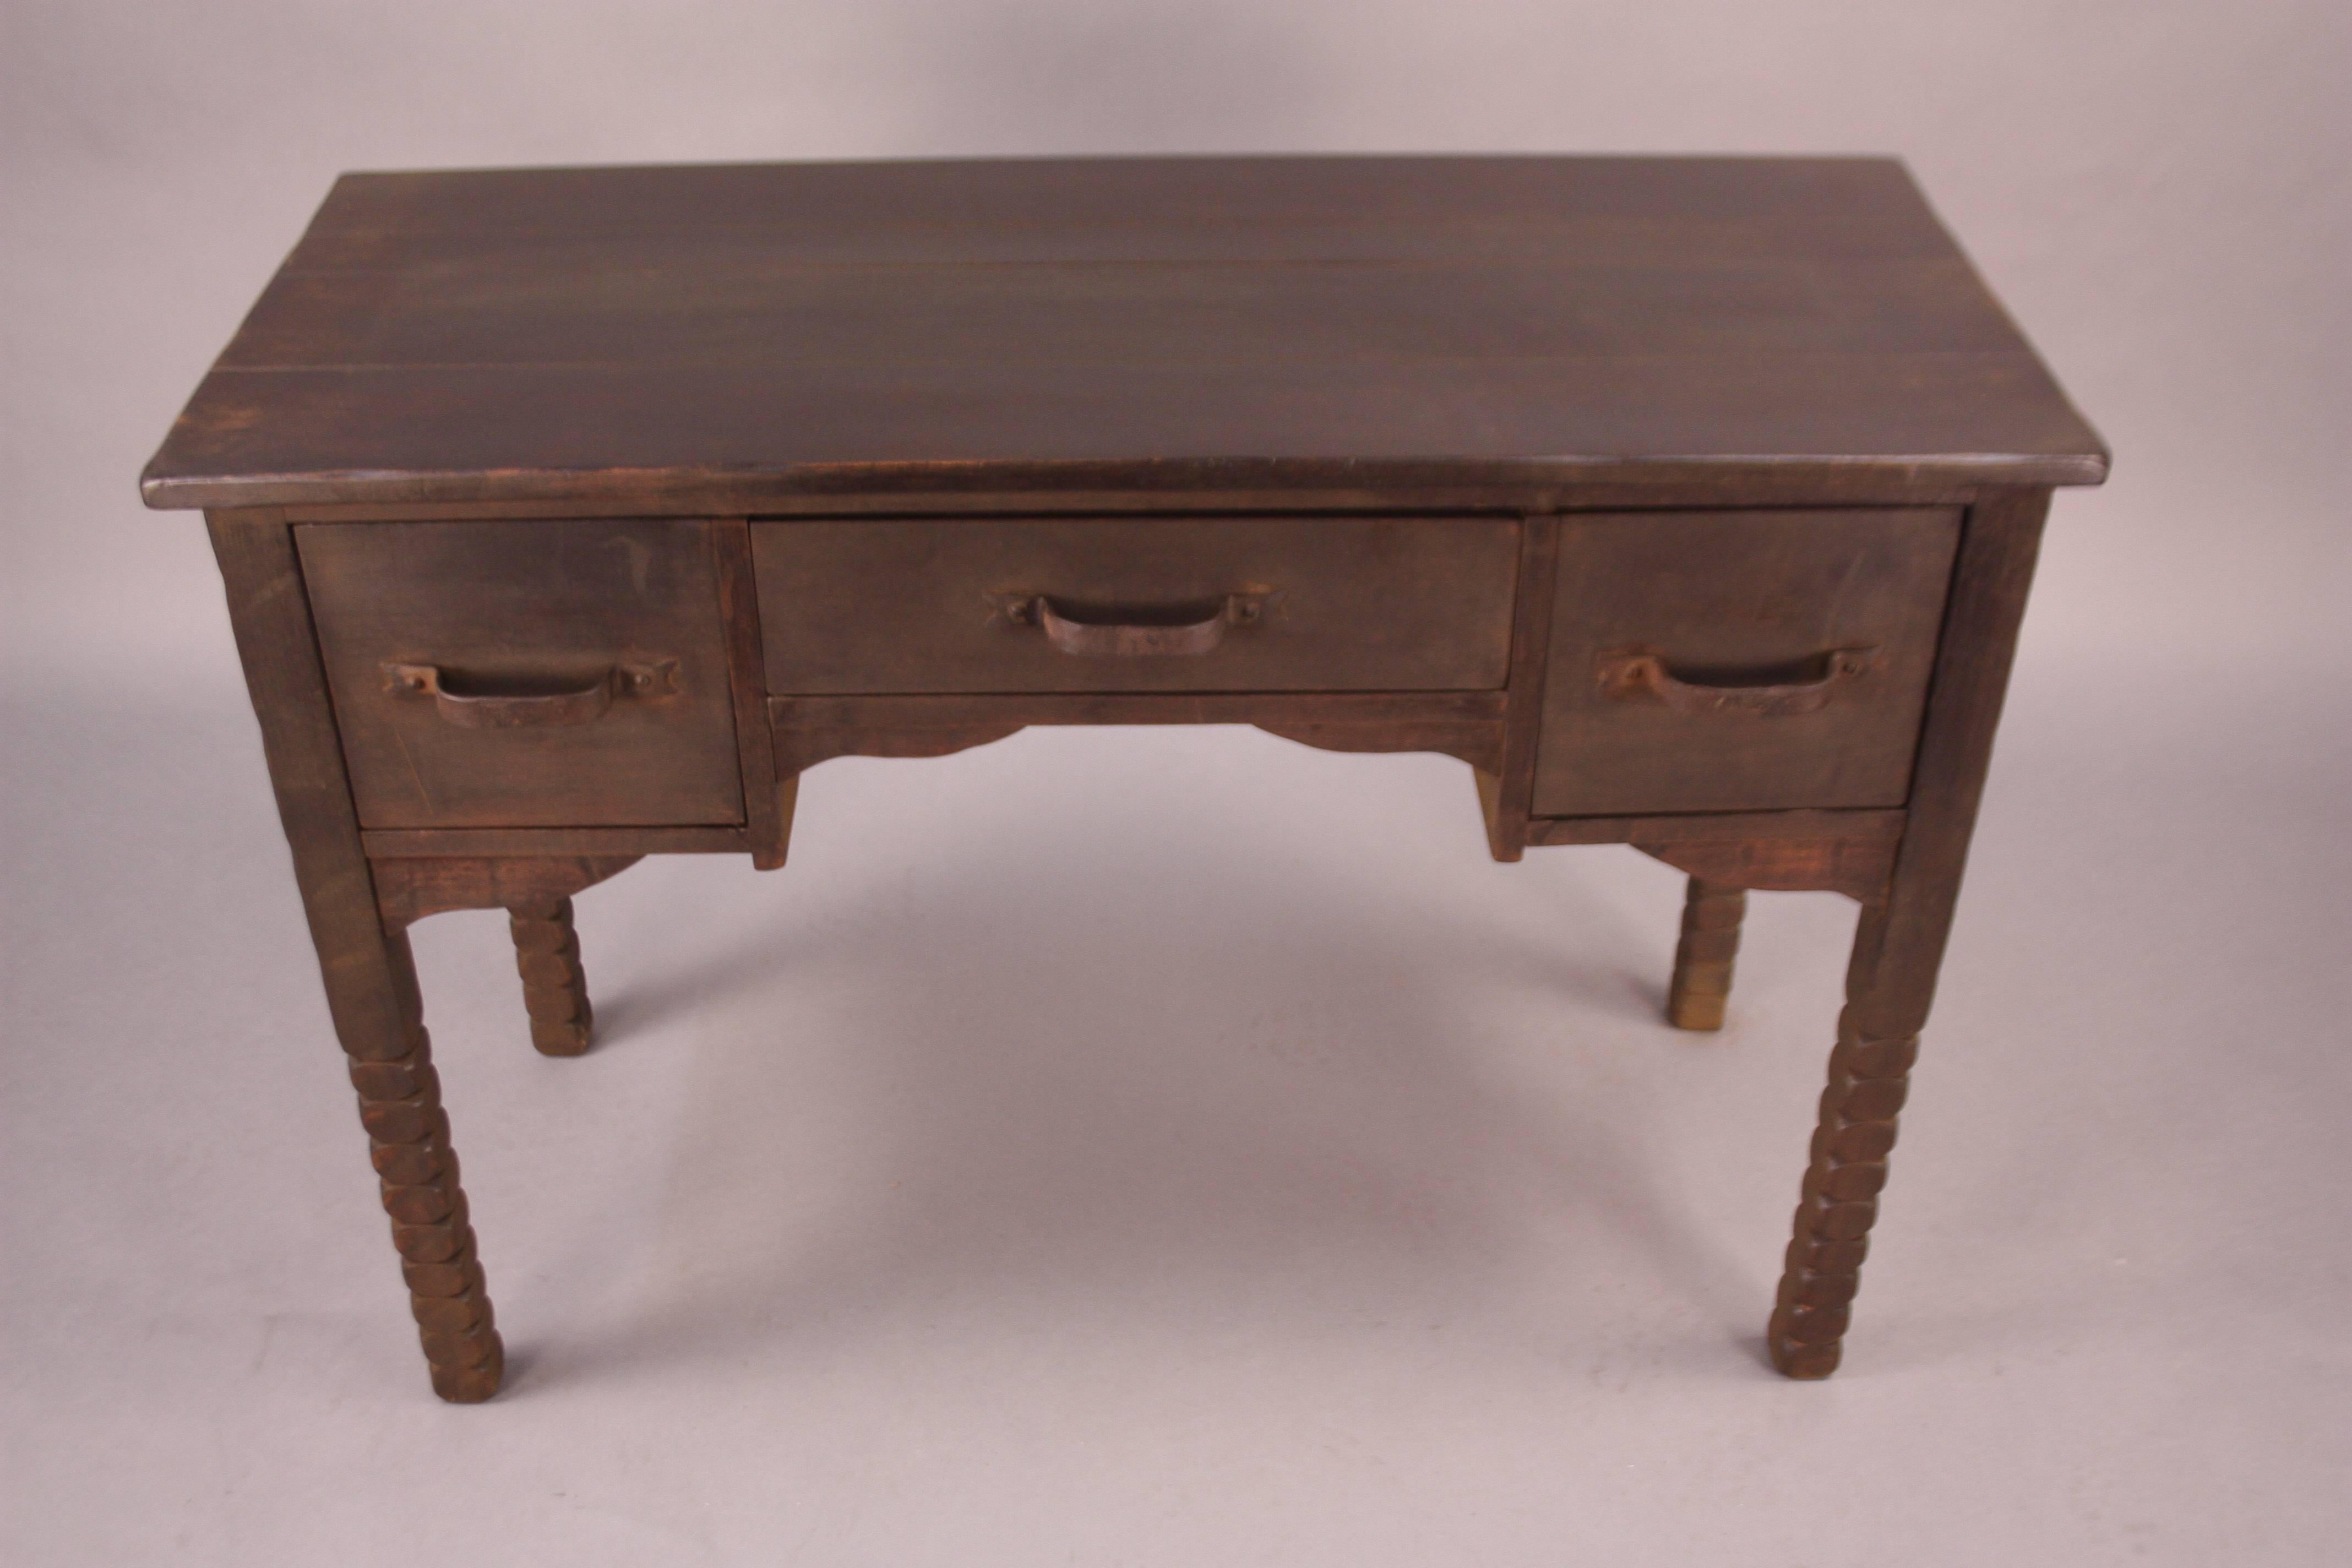 Signed Monterey desk with restored finish. Measures: 30